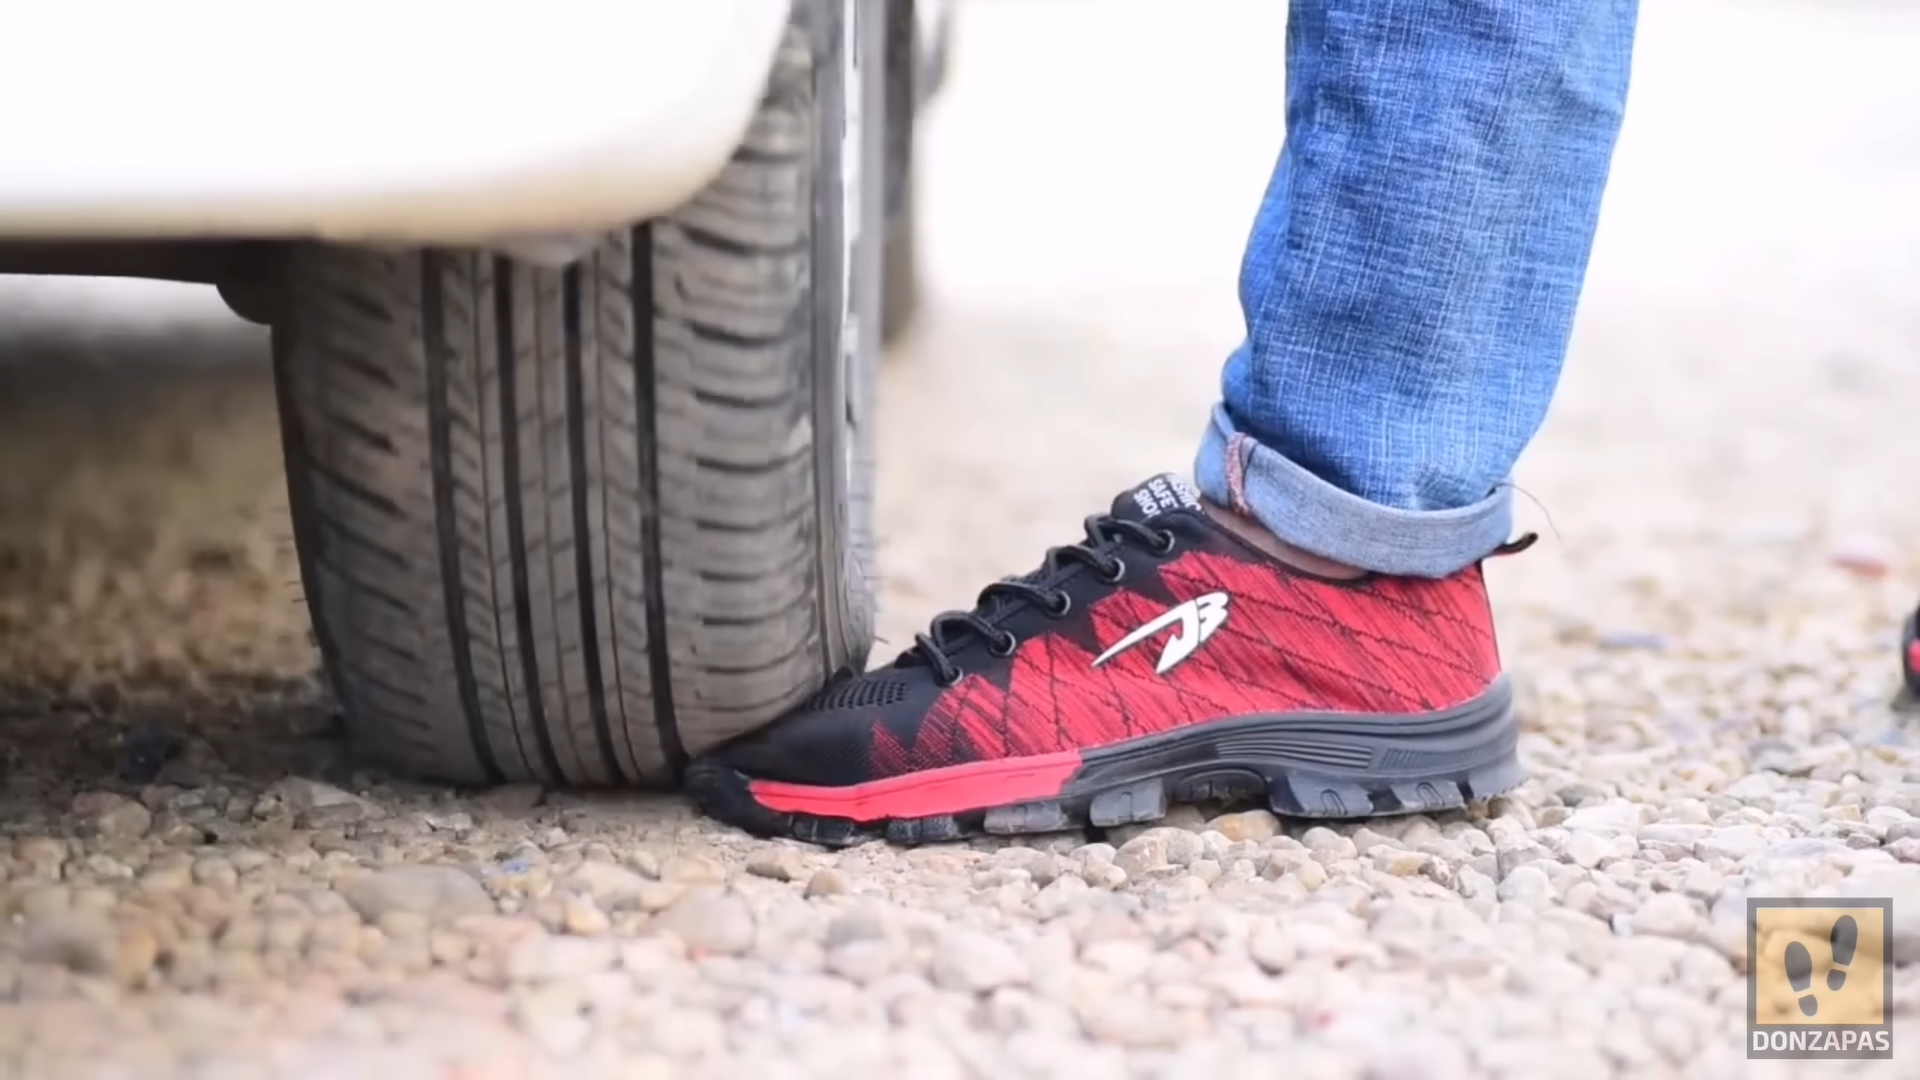 Cargar video: Mejores Zapatos de Seguridad - Don Zapas